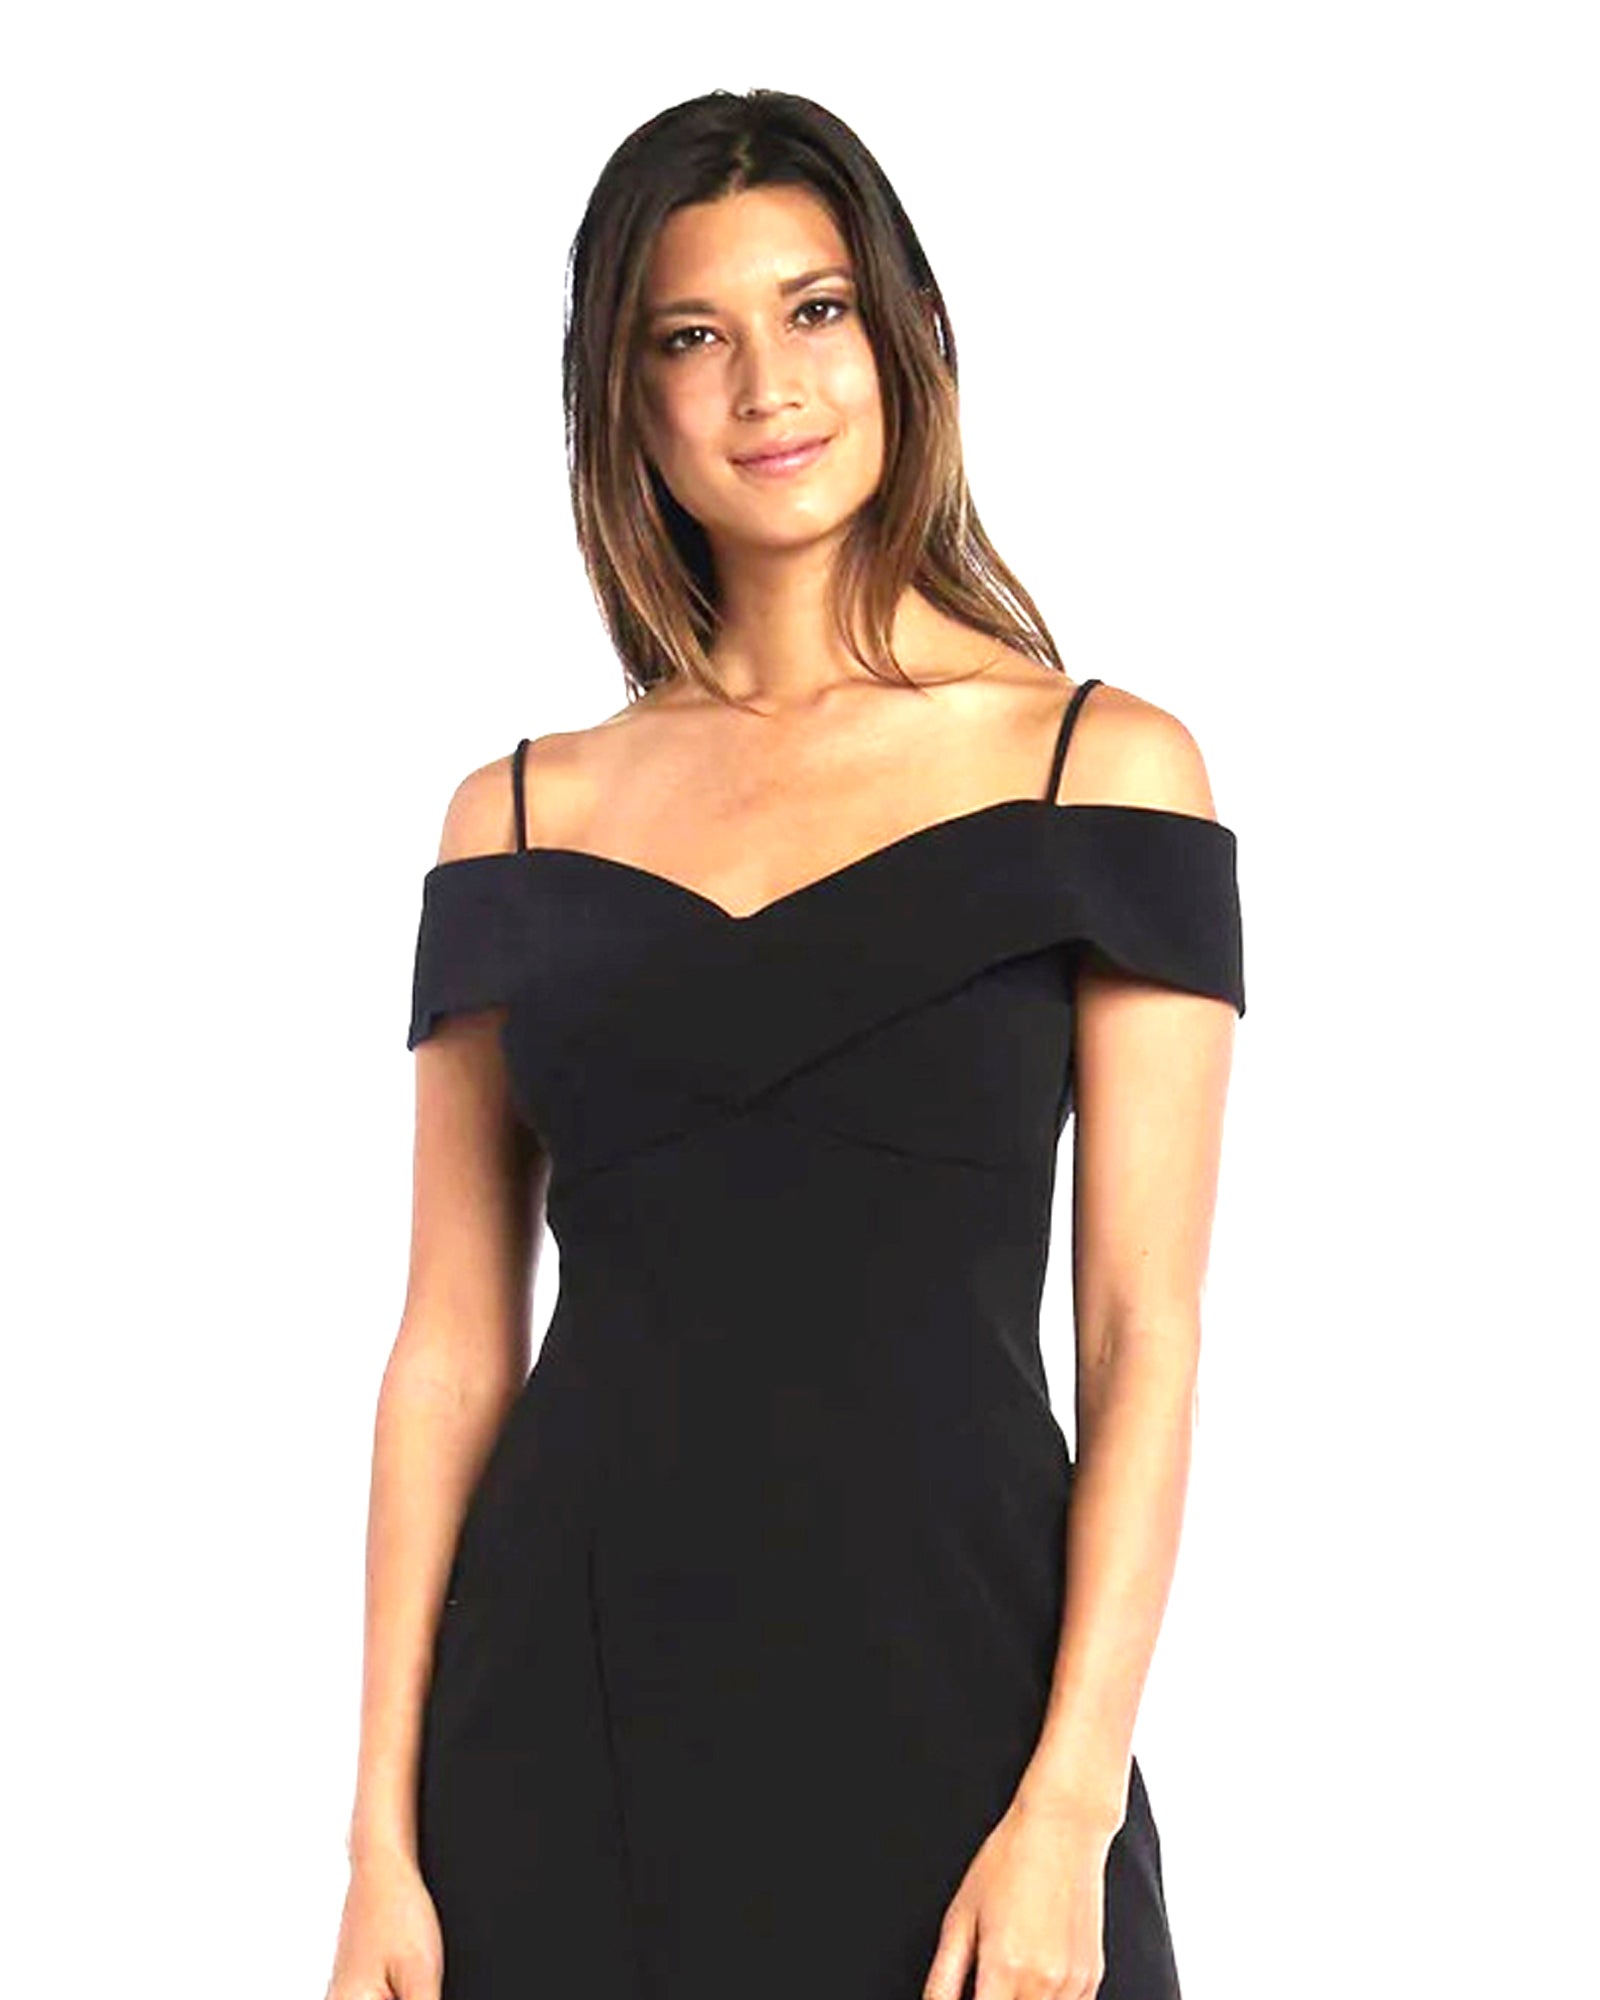 Women's Solid Slit-Front Maxi Dress